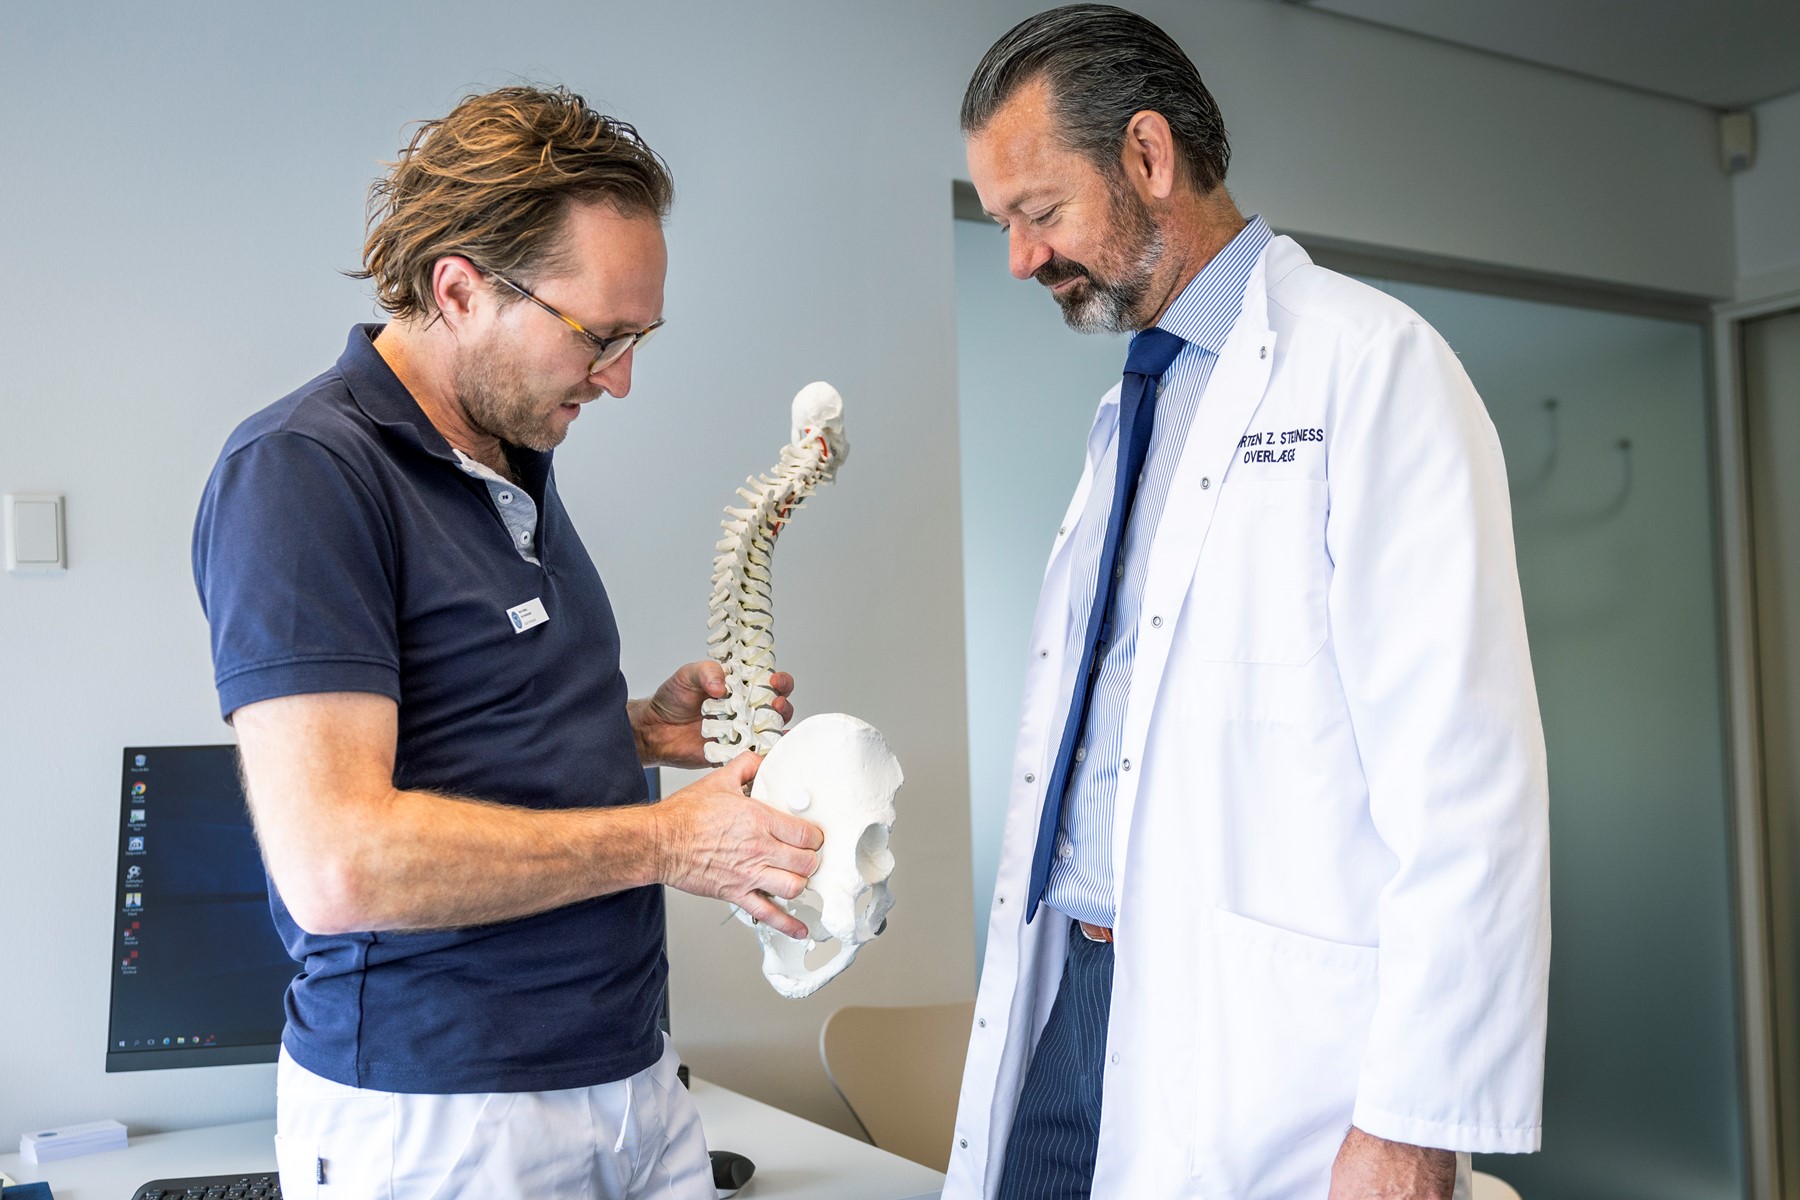 I maj fik Morten Zebitz Steiness mulighed for at starte et nyt rygcenter op på hospitalet sammen med sin ven, fysioterapeut Martin Melbye. Foto: Martel Andersen